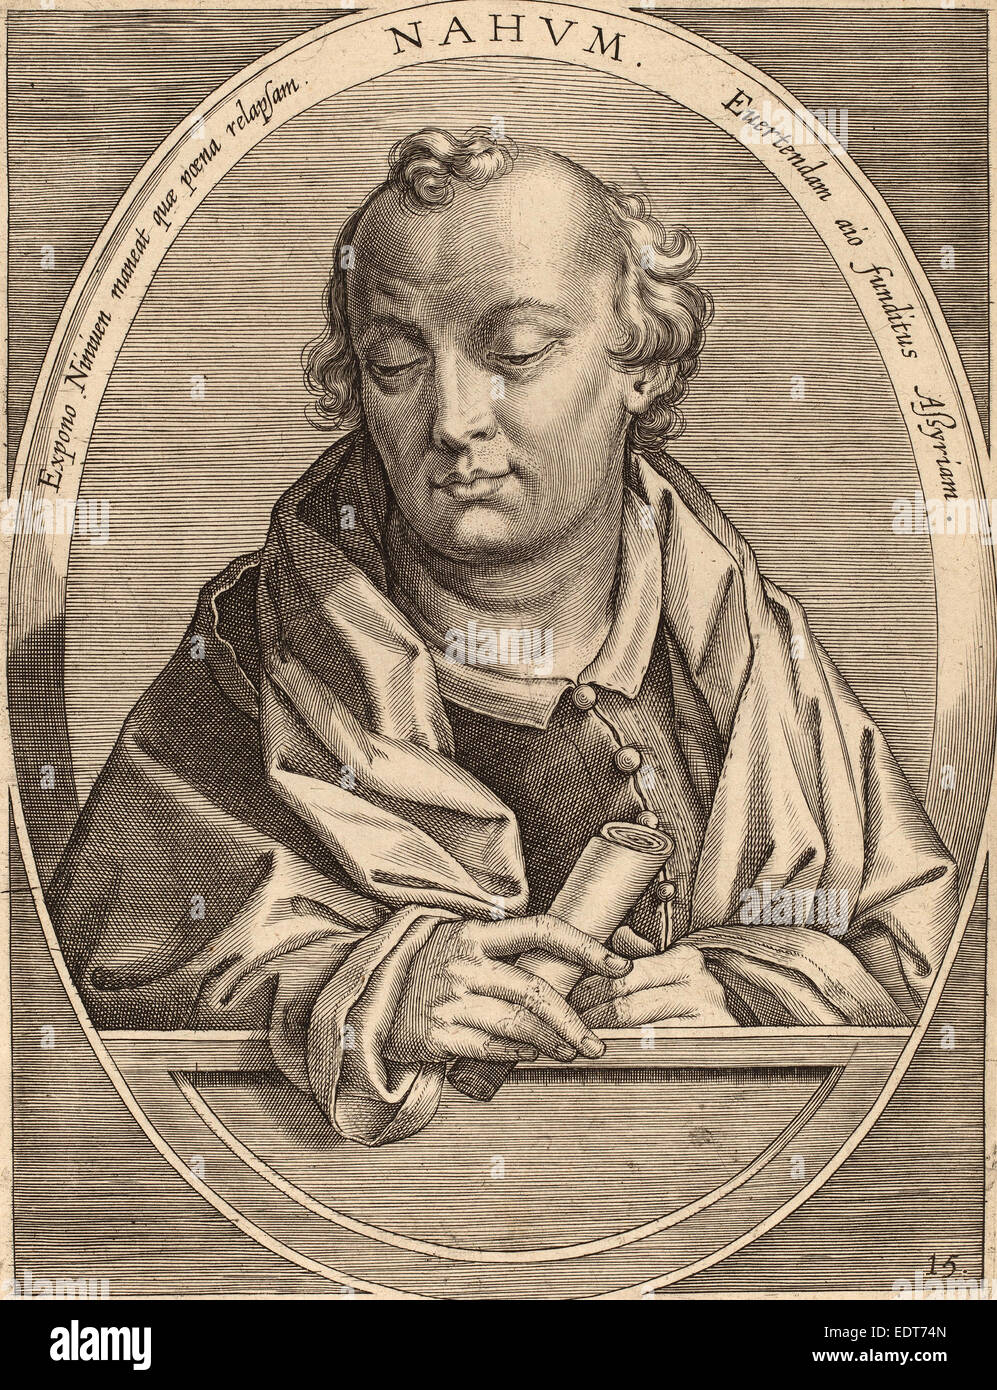 Theodor Galle after Jan van der Straet (Flemish, c. 1571 - 1633), Nahum, published 1613, engraving on laid paper Stock Photo